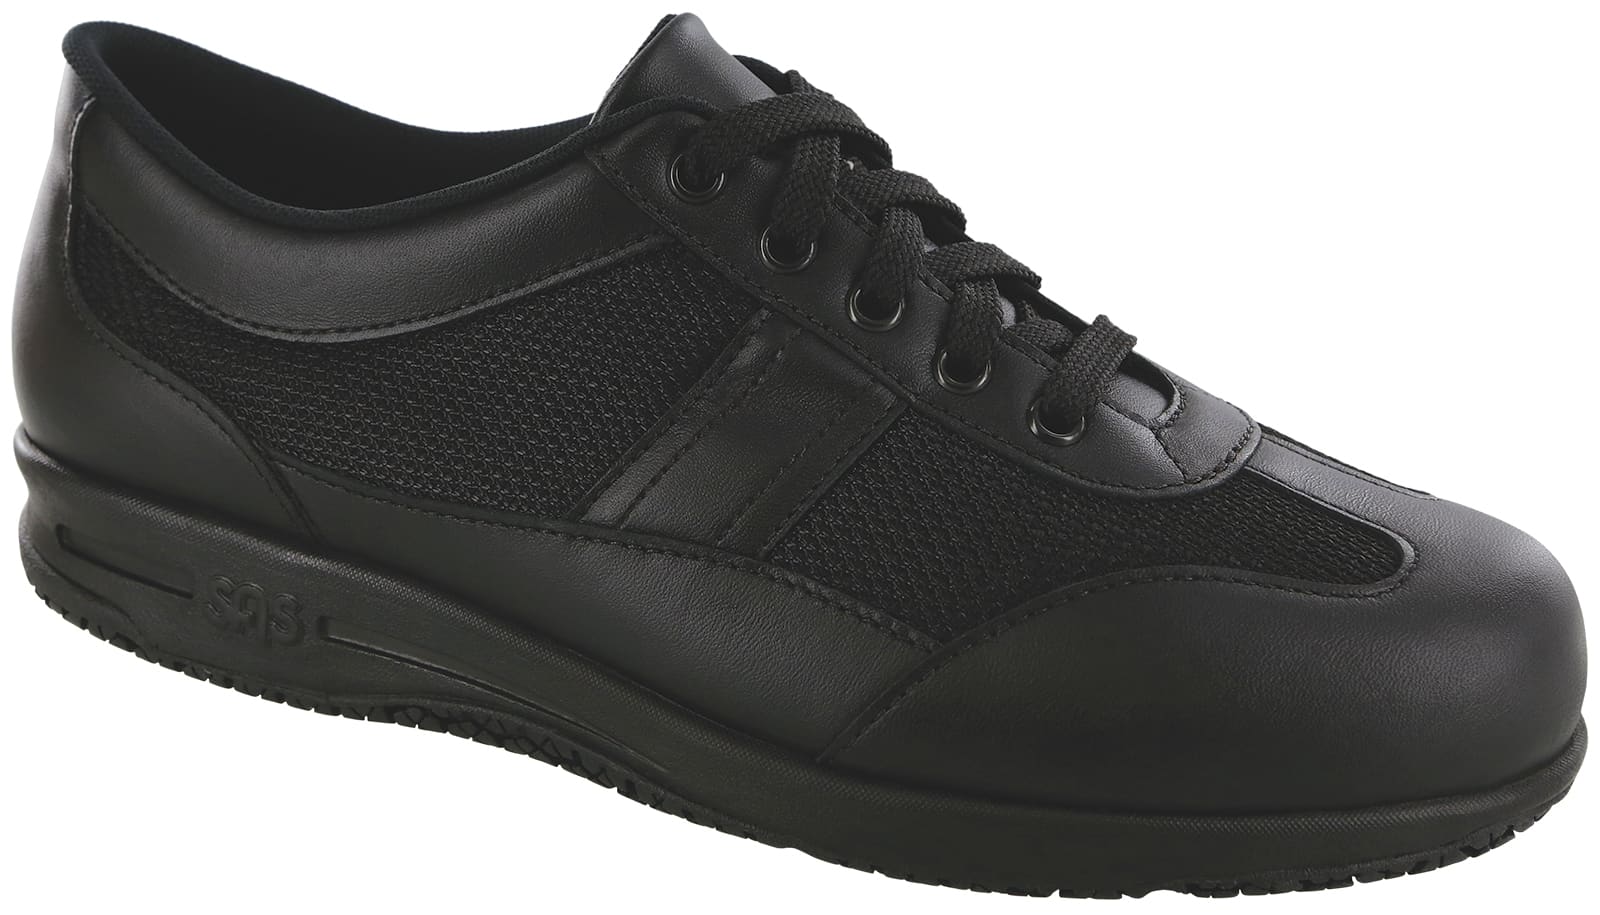 Buy SAS Men's 'Bout Time Shoe (8. 5 D(M) US, Black) at Amazon.in